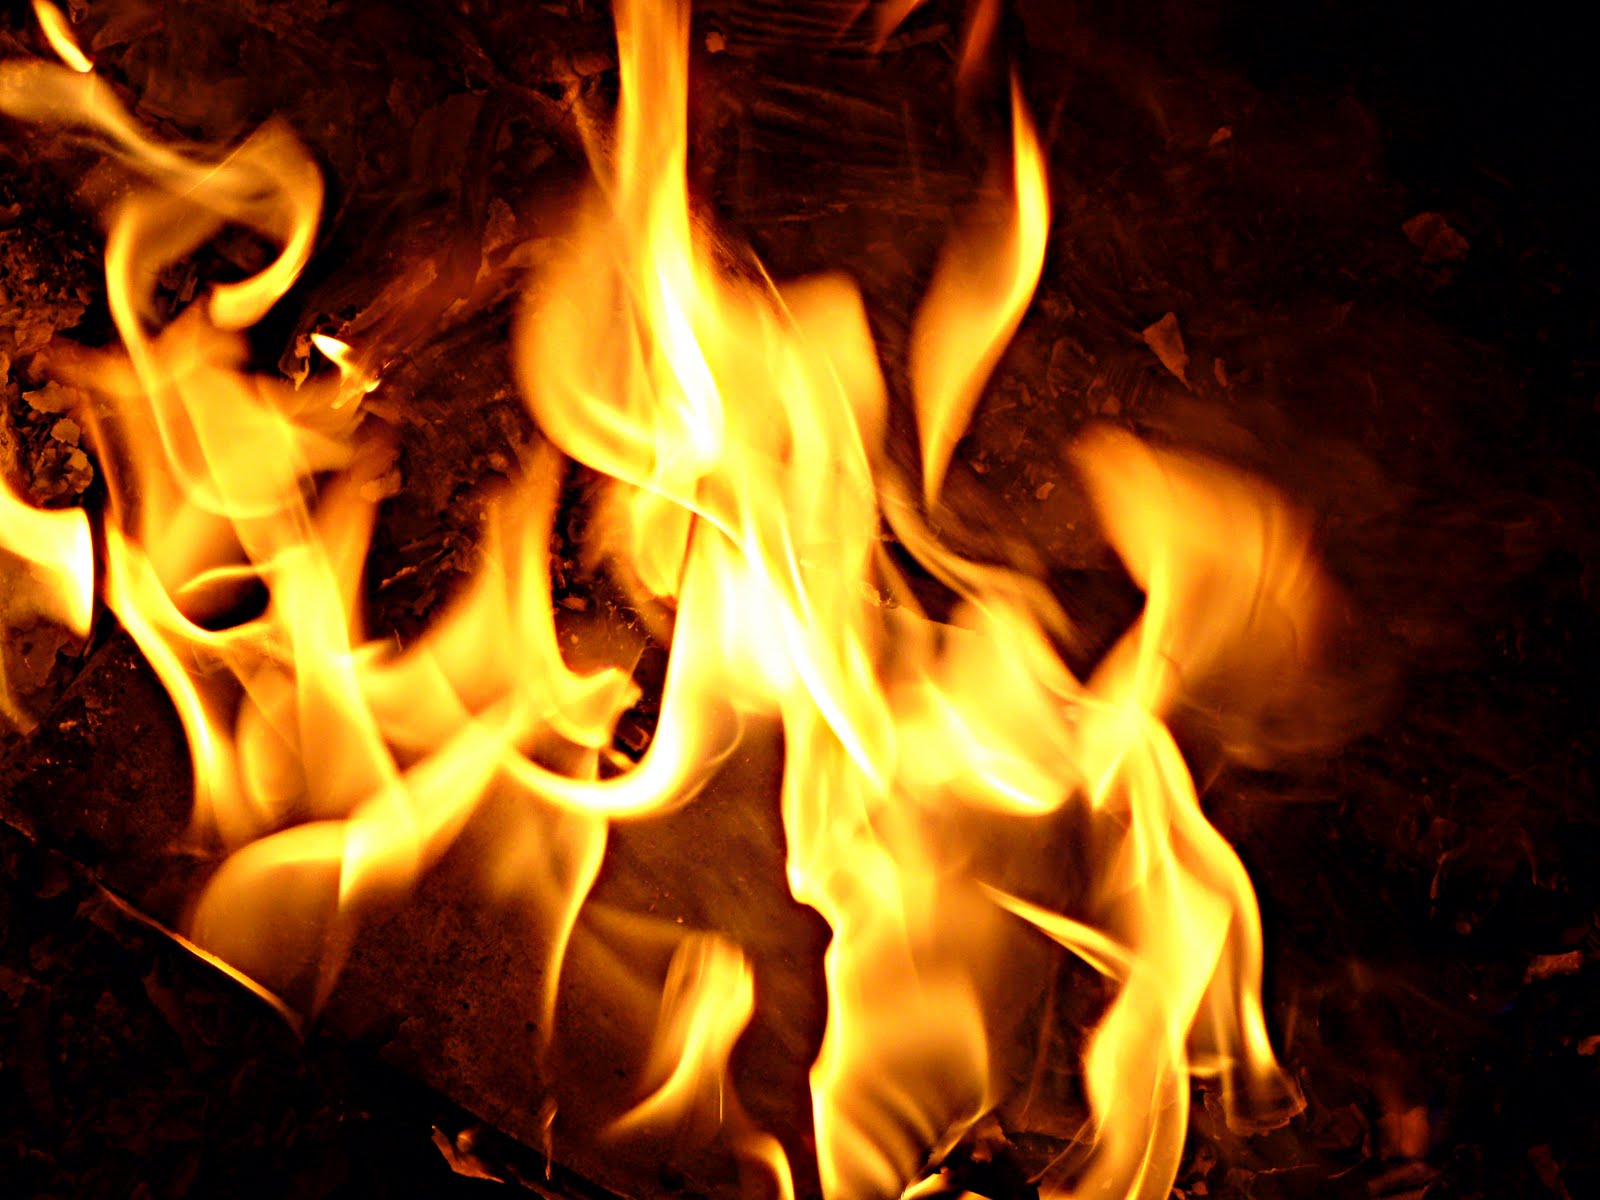 unfolding: A burning fire in the bones